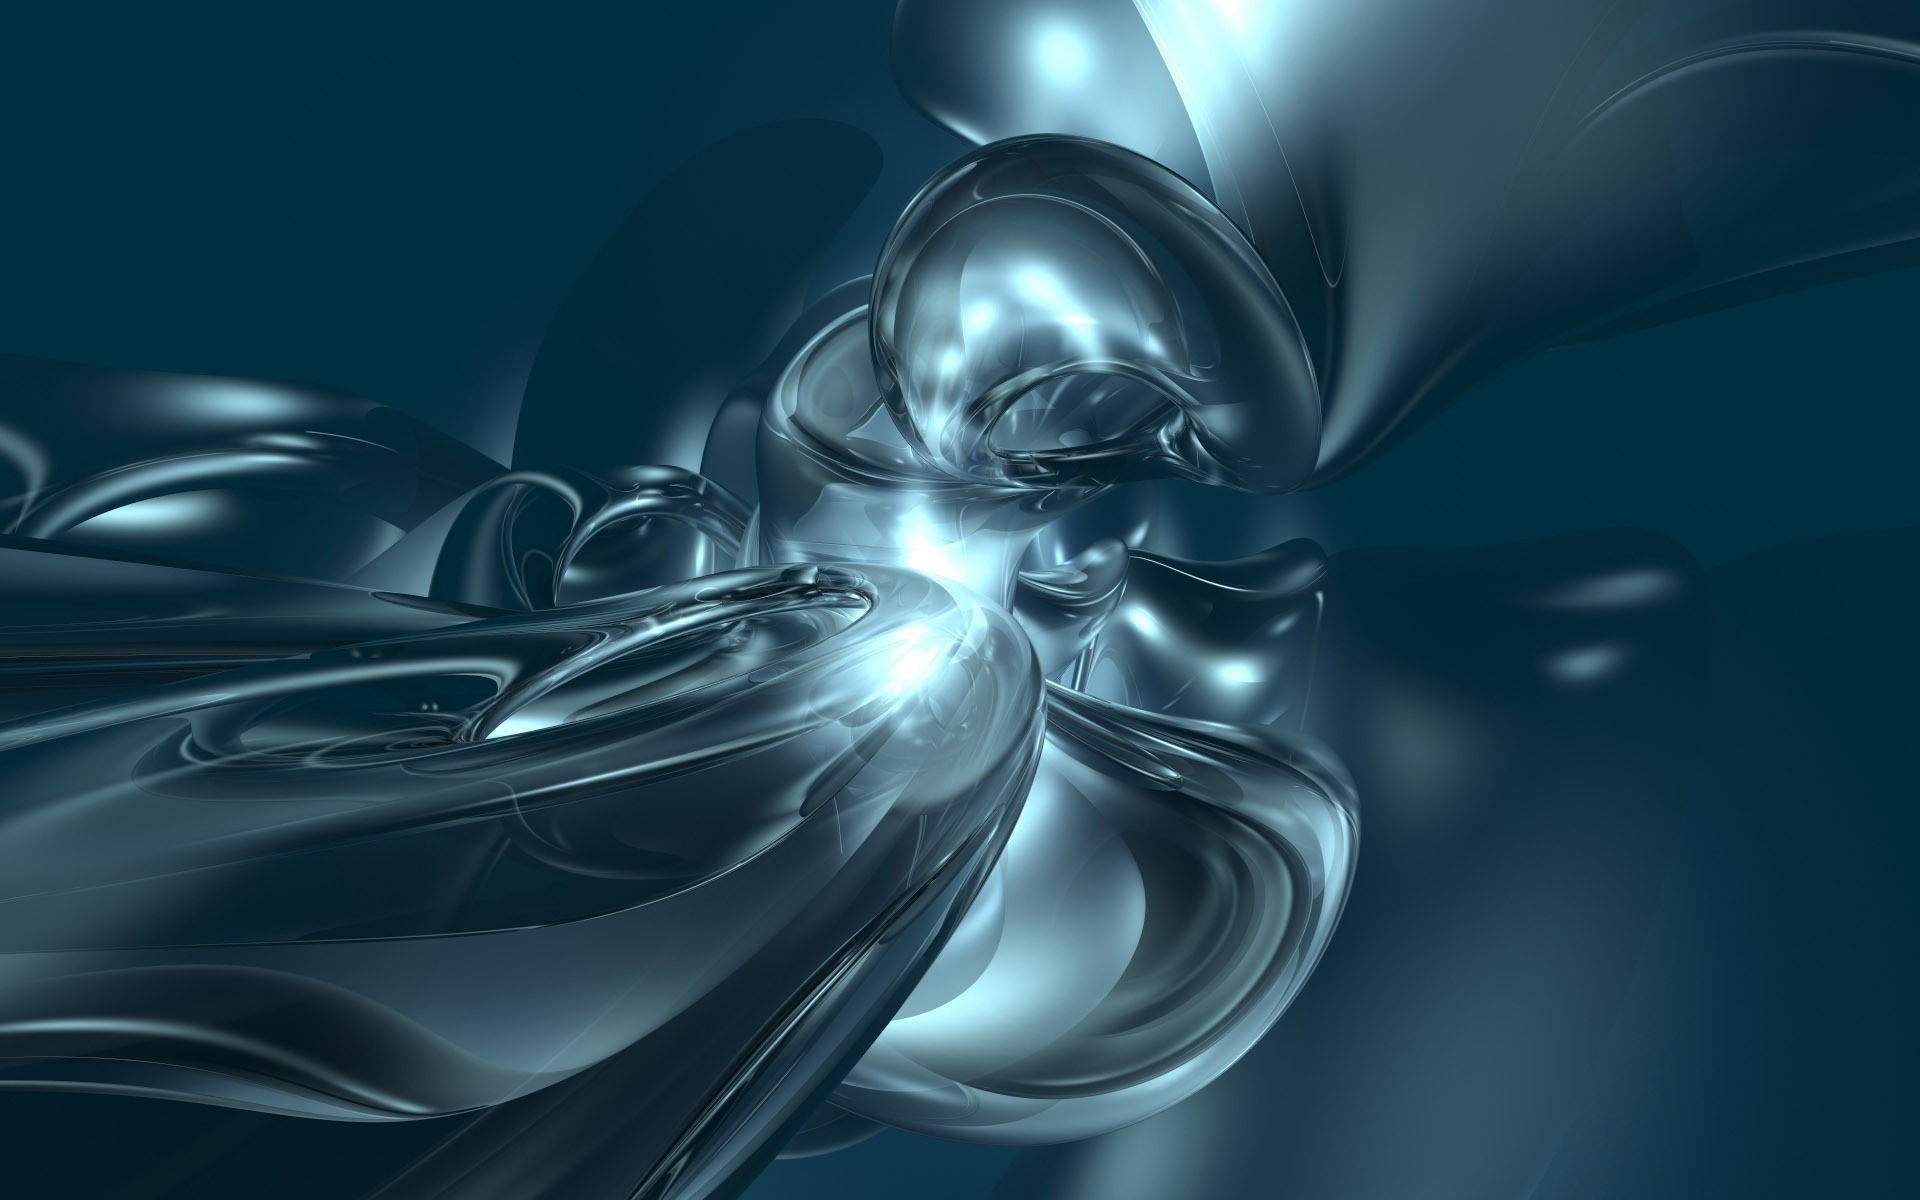 abstract curve wave motion design light desktop shining fantastic dynamic illustration graphic show fantasy shape smooth fractal blur color futuristic blue background art